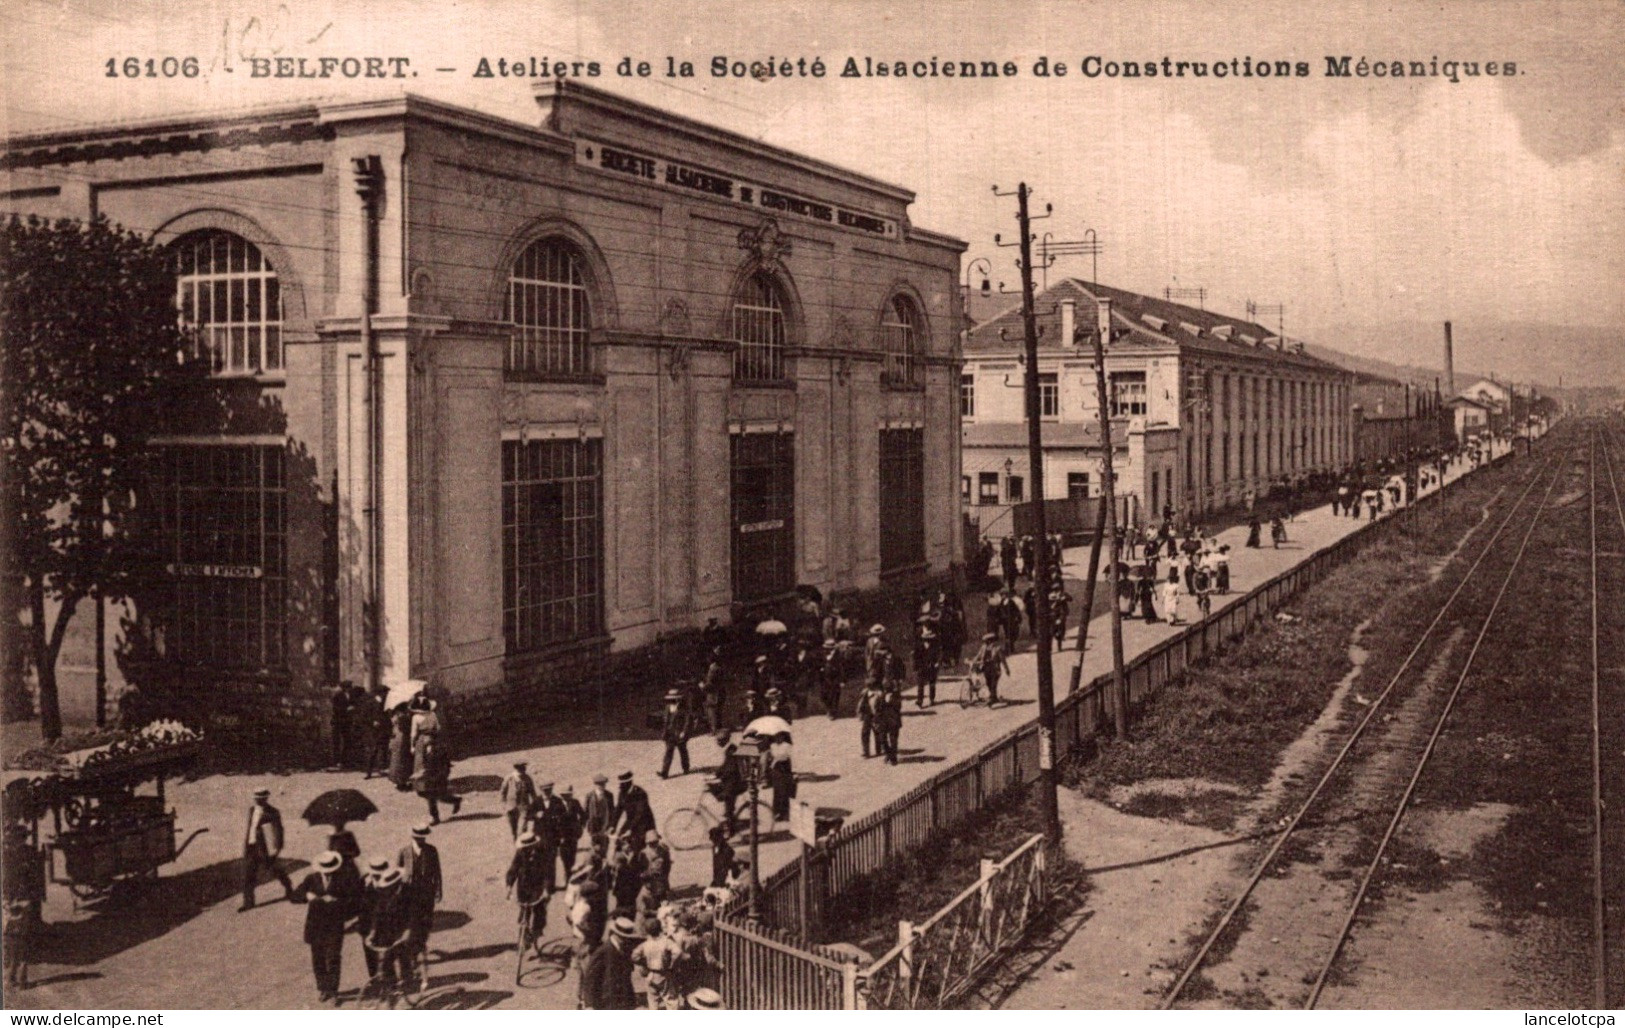 90 - BELFORT / ATELIERS DE LA SOCIETE ALSACIENNE DE CONSTRUCTIONS MECANIQUES - Belfort - City